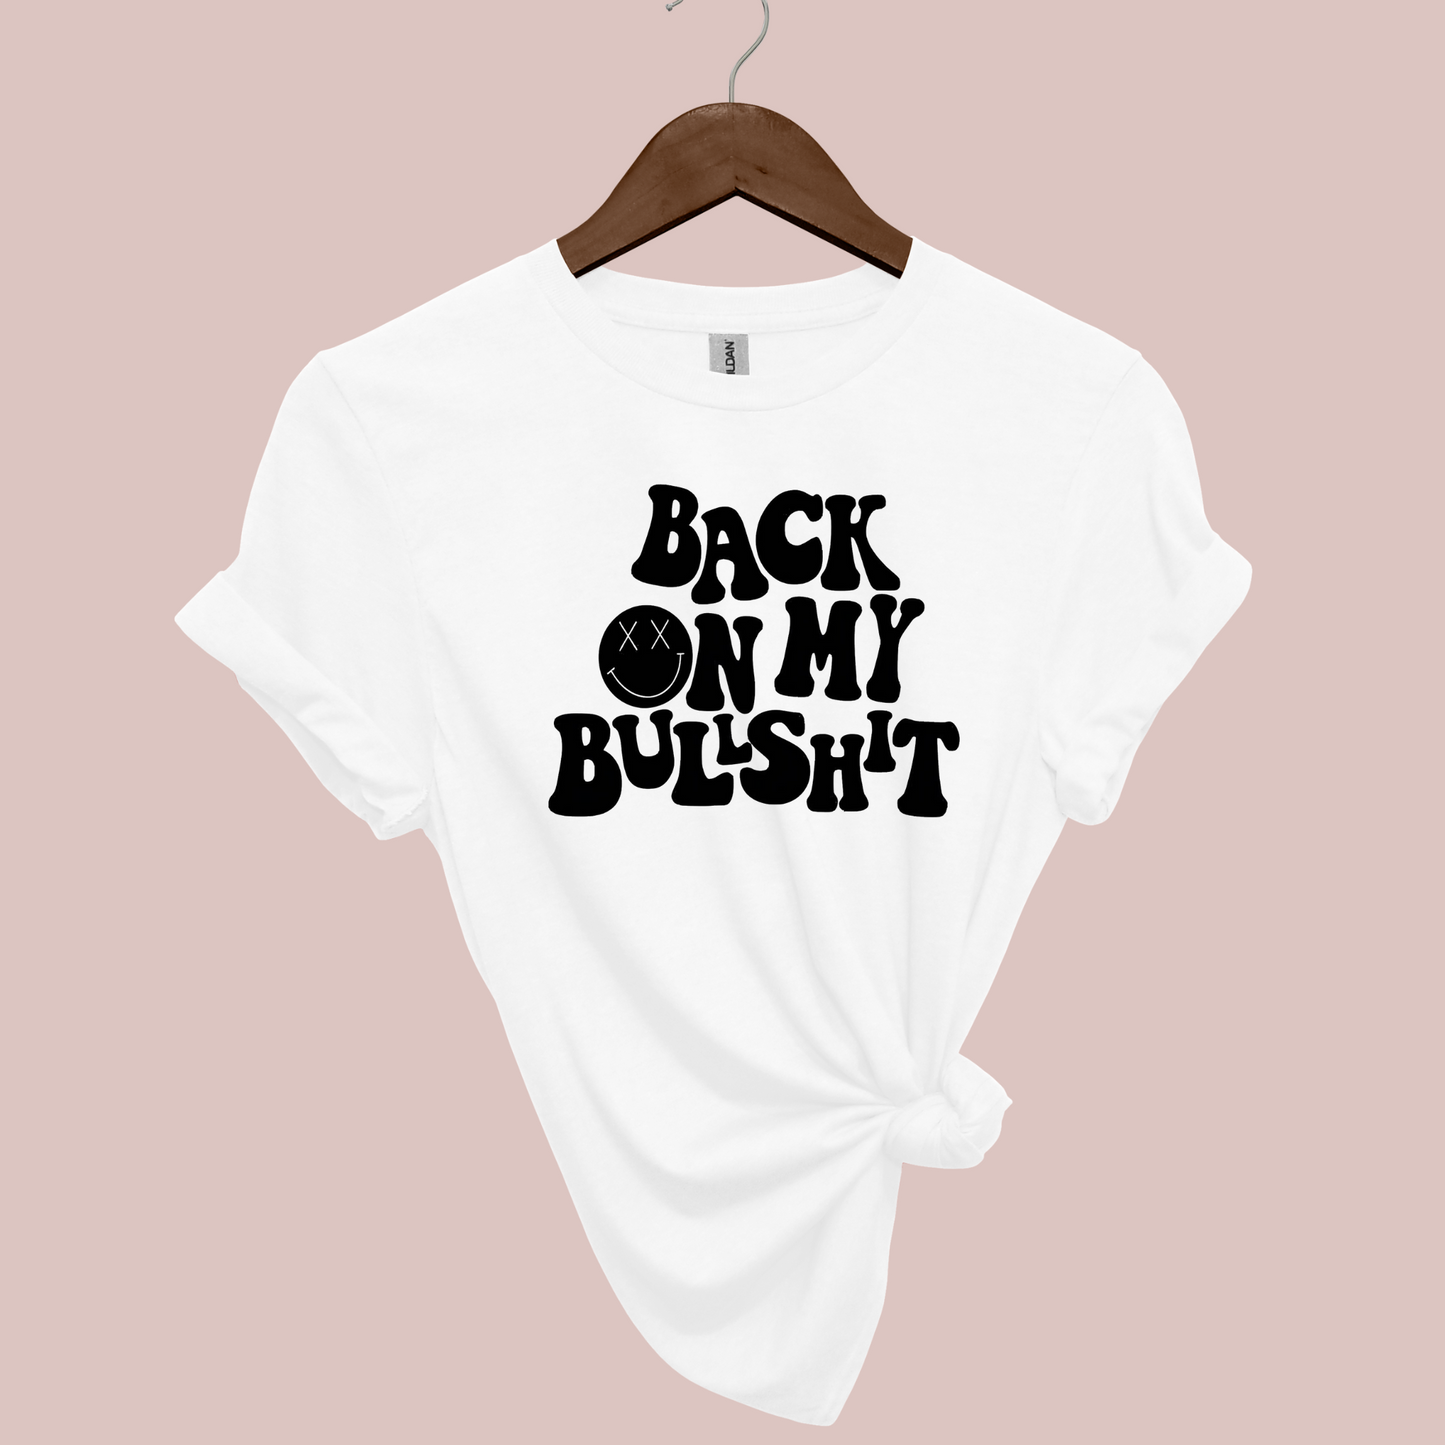 Back on my Bullshit Humorous T Shirt white